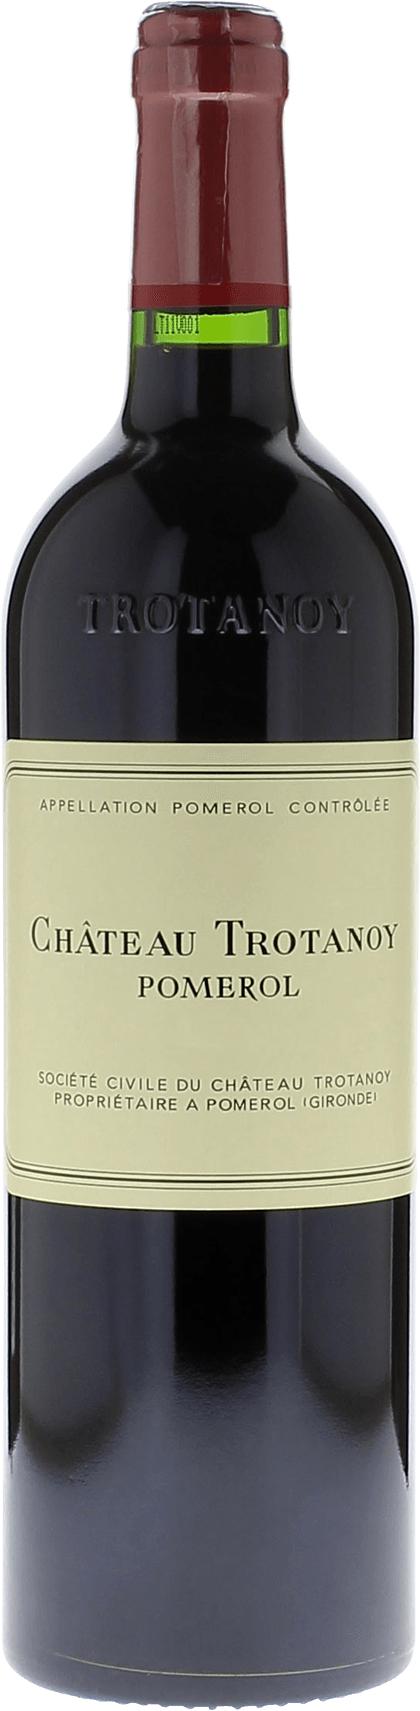 Trotanoy 2001  Pomerol, Bordeaux rouge